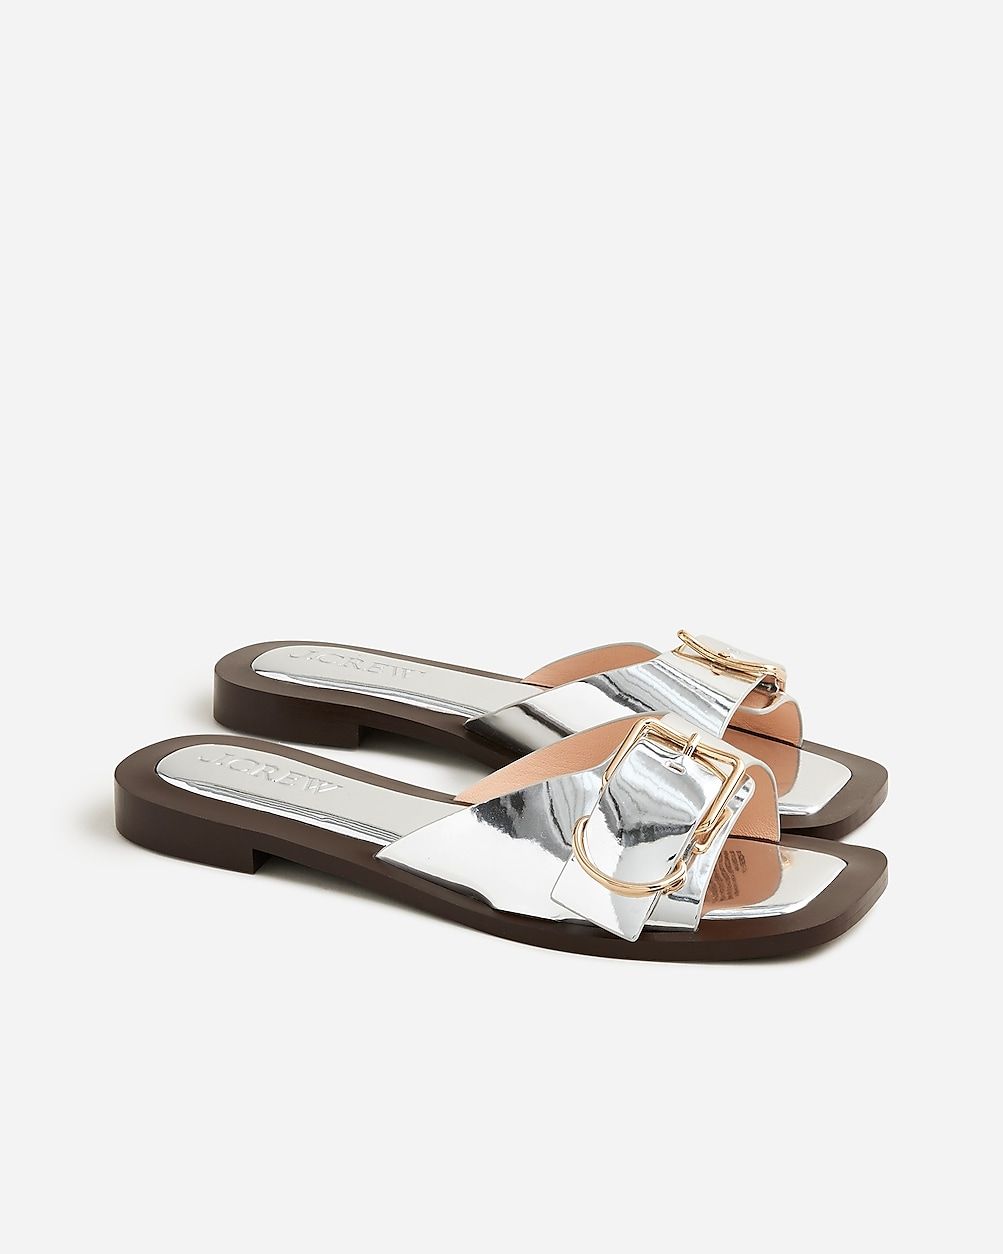 Callie sandals in metallic leather | J.Crew US